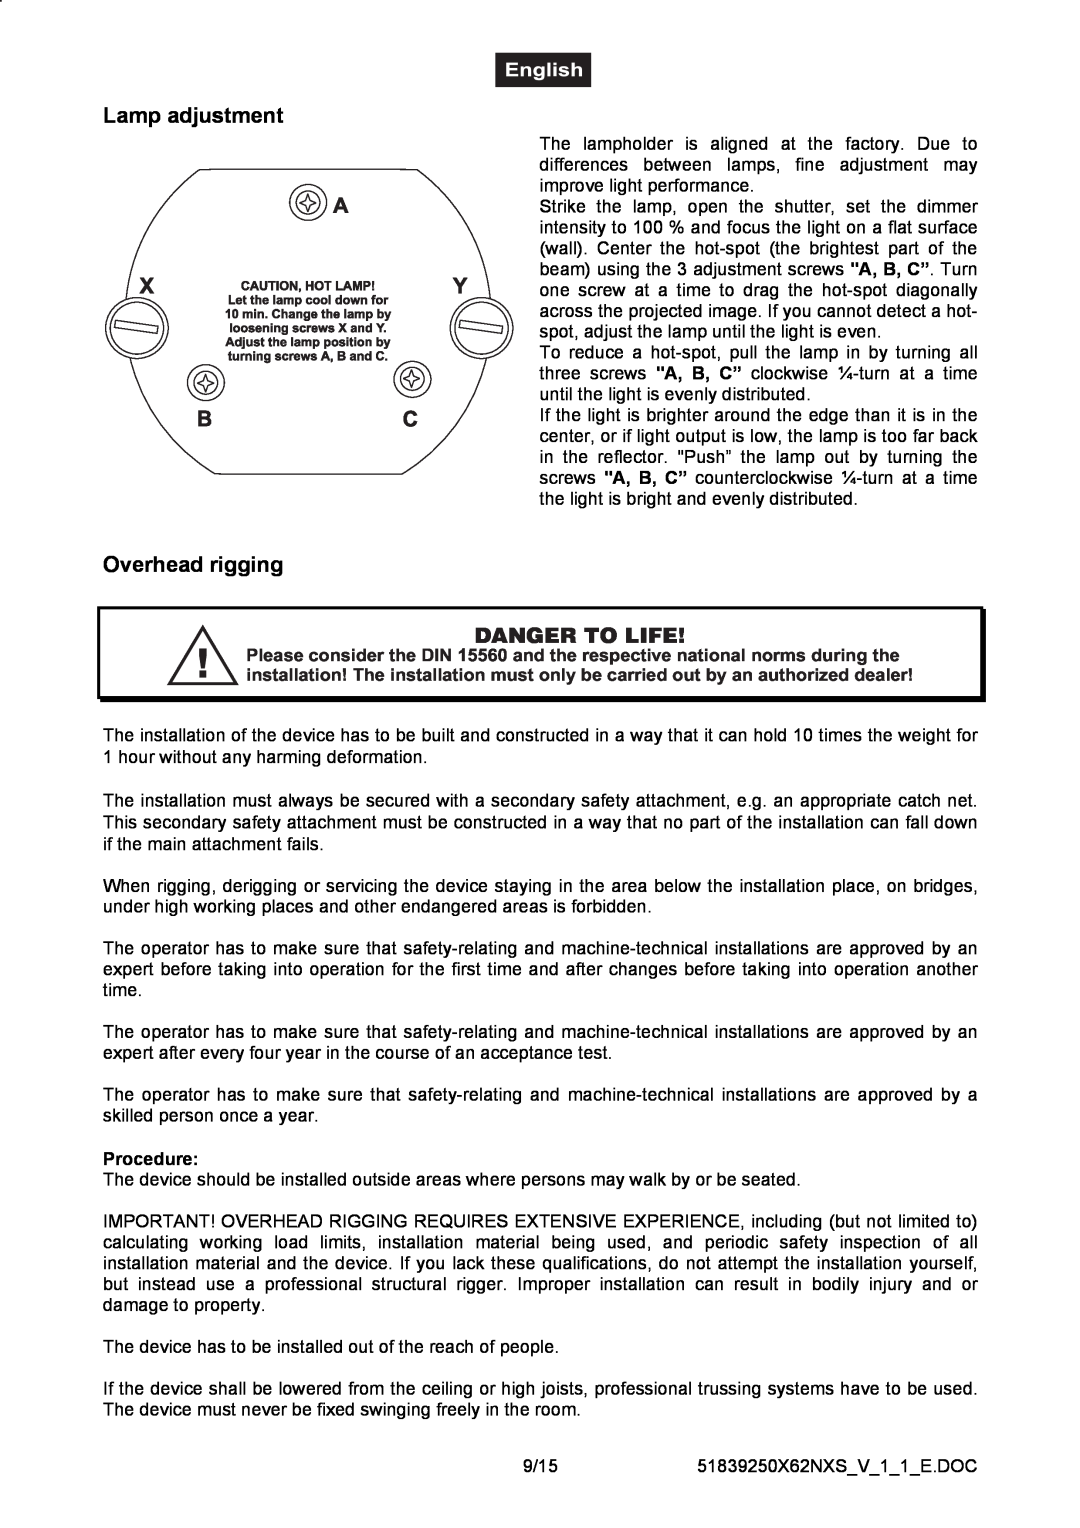 Futuretech 250 user manual Danger To Life, Lamp adjustment, Overhead rigging, Procedure 